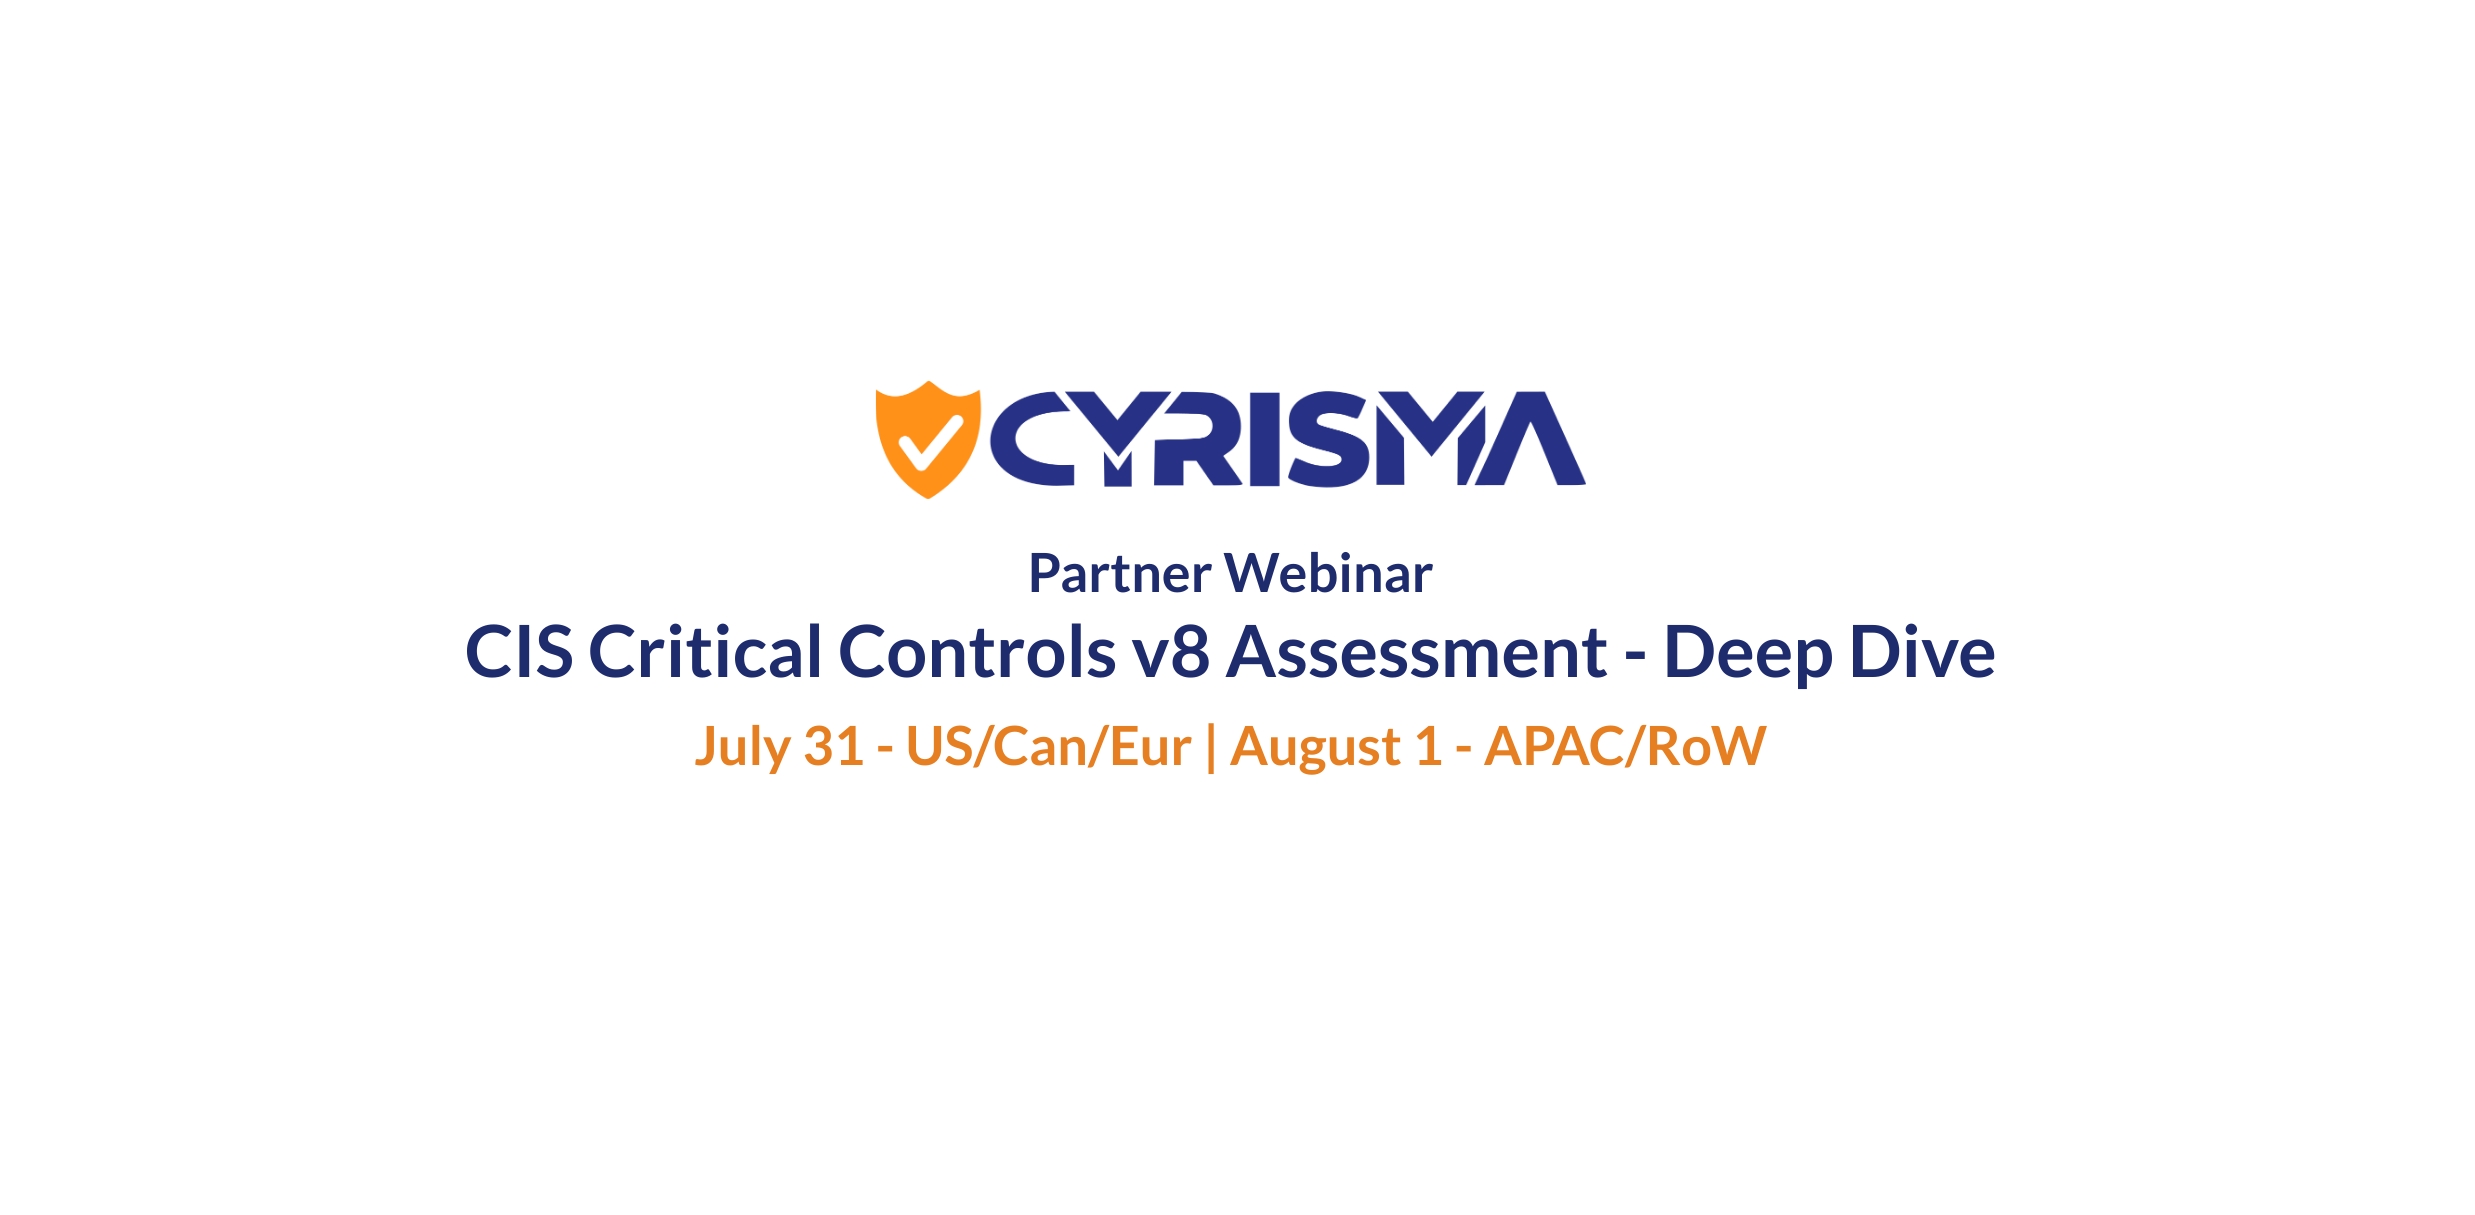 CYRISMA Platform Update Webinar